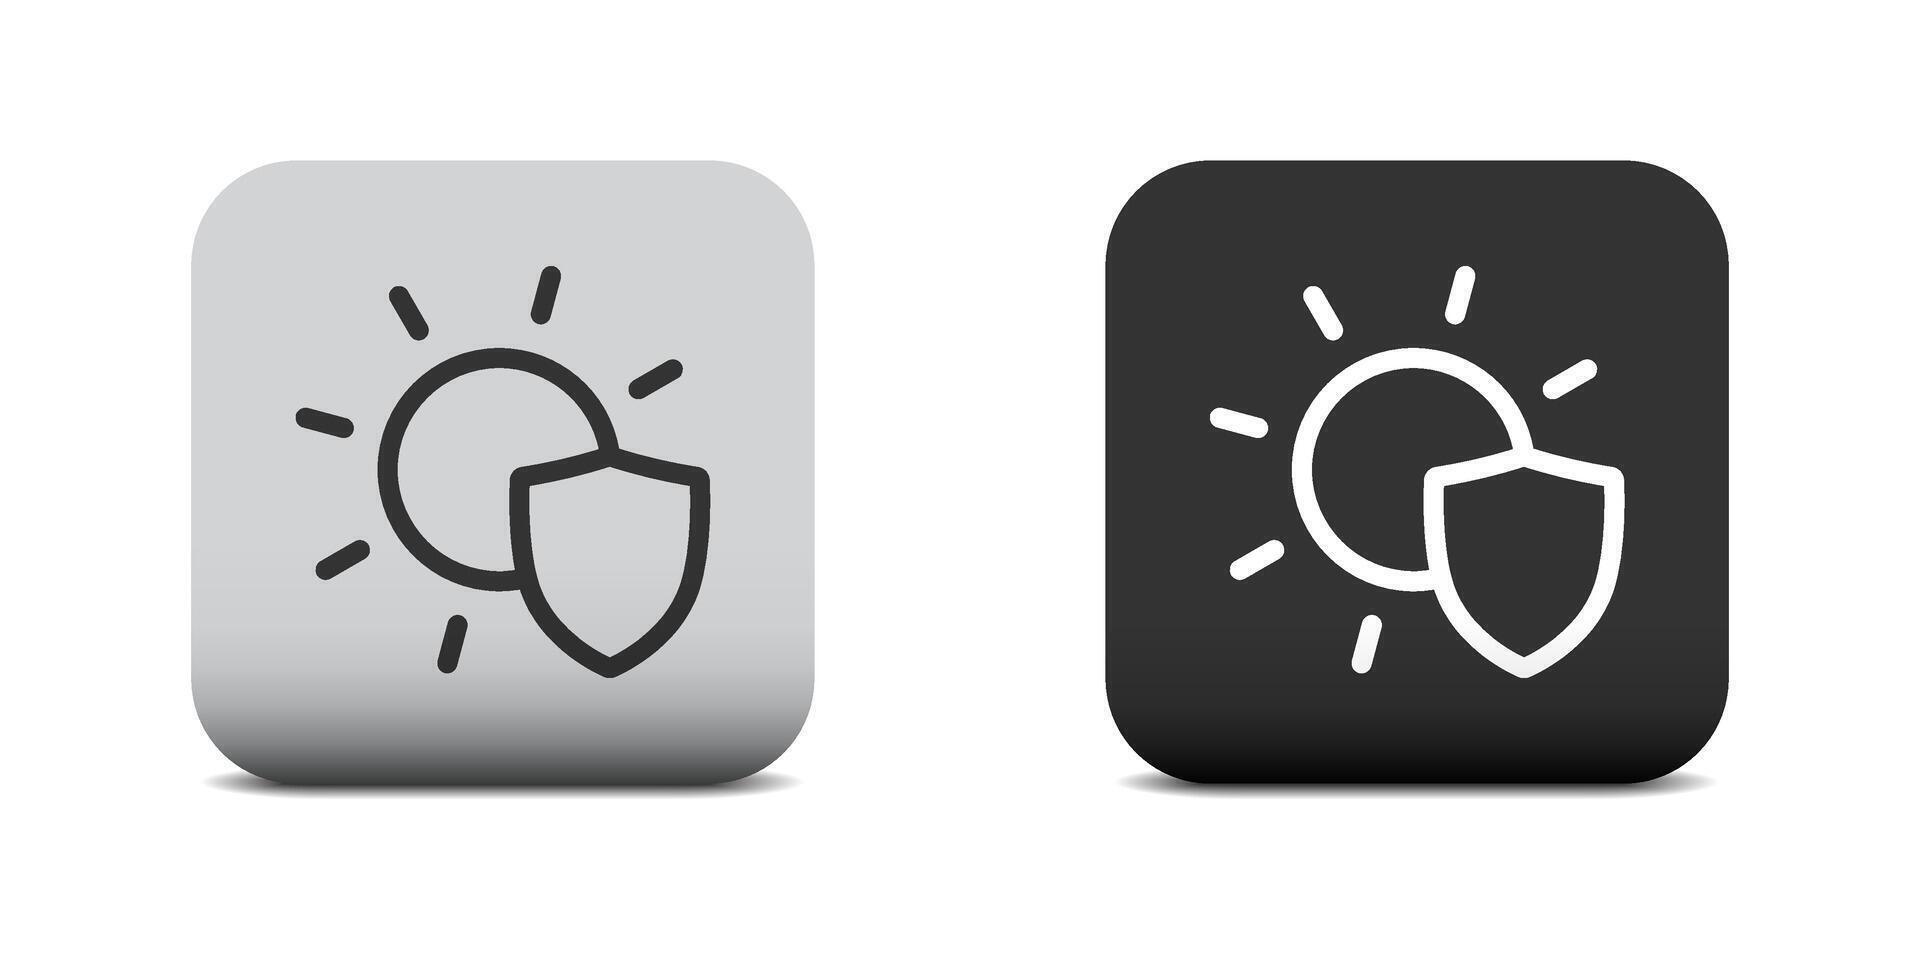 Sun resistant icon. Sun protection shield icon. Vector illustration.